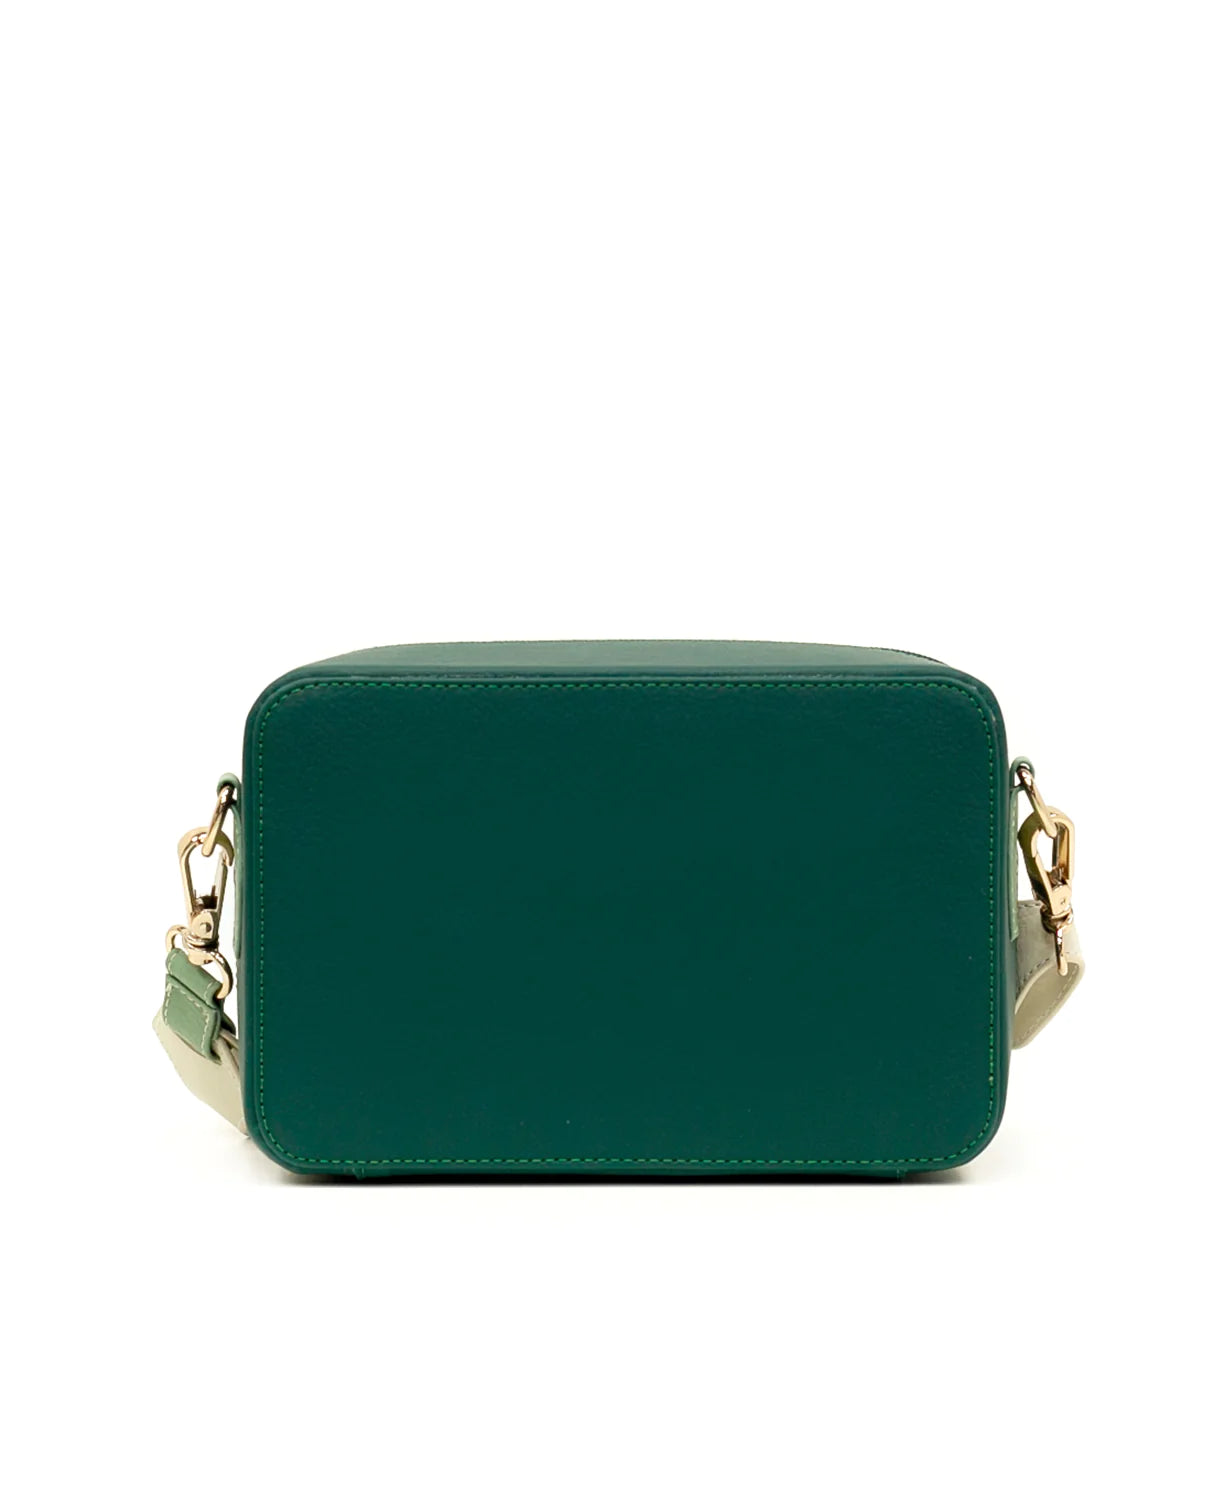 Medium Green Diamond Stitched Ladies Handbag